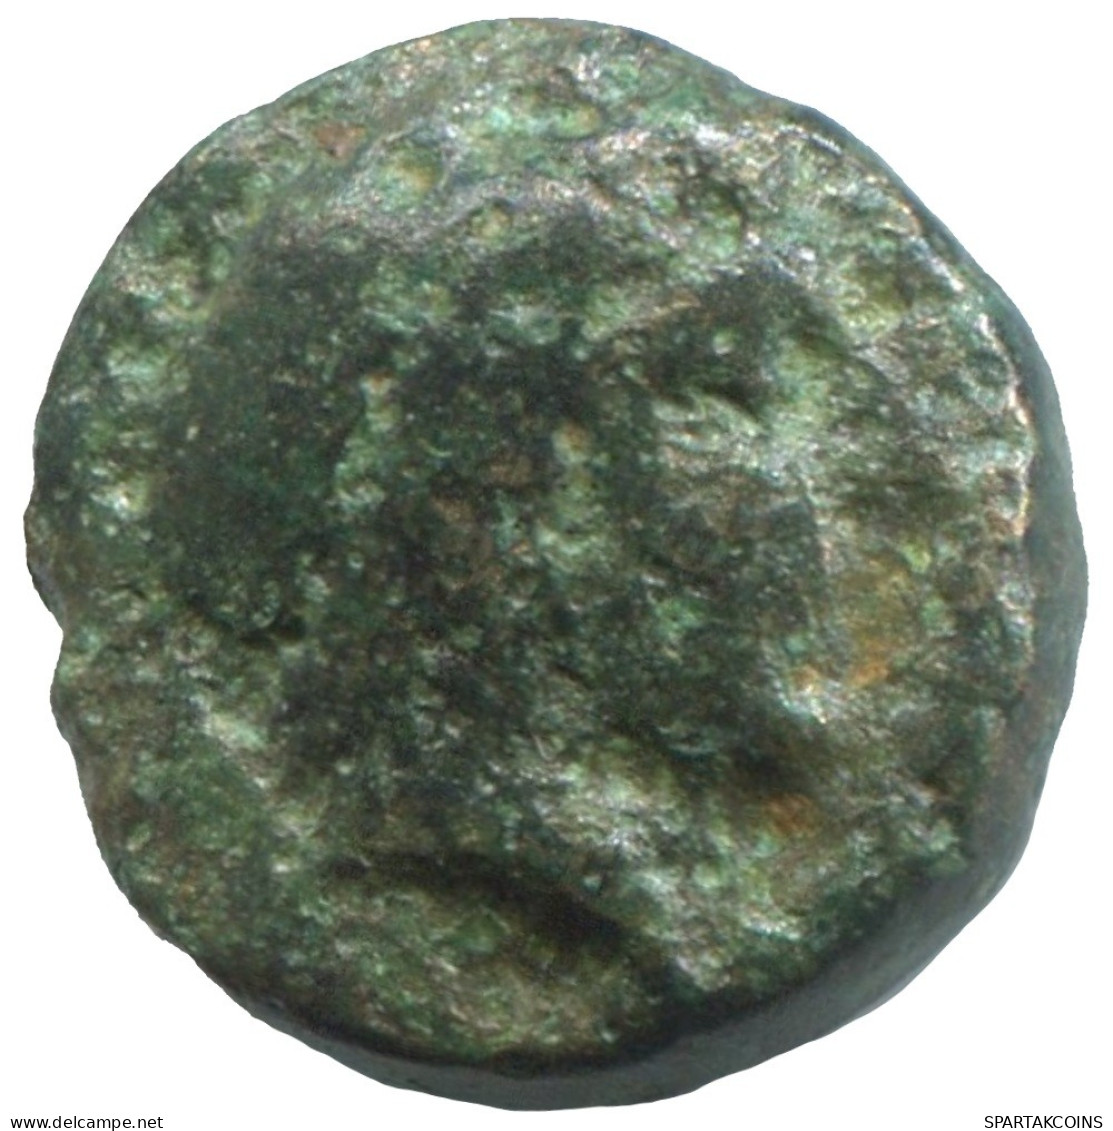 MYSIA PERGAMON PHILETAIROS KING OF PERGAMON GREEK 1.3g/11mm #SAV1375.11.U.A - Griechische Münzen